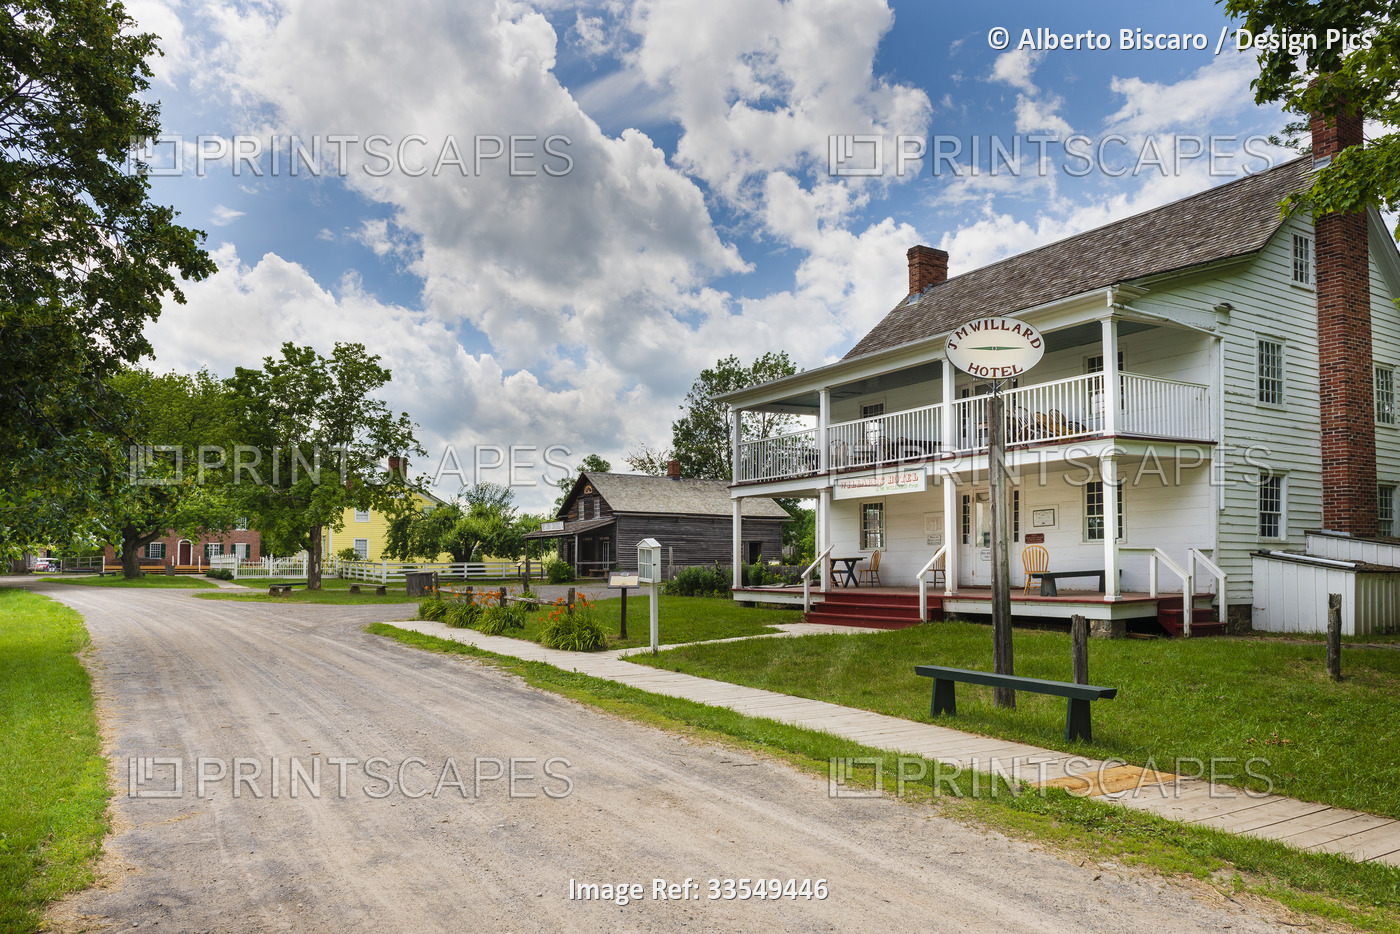 Heritage Buildings at Upper Canada Village; Morrisburg, Ontario, Canada